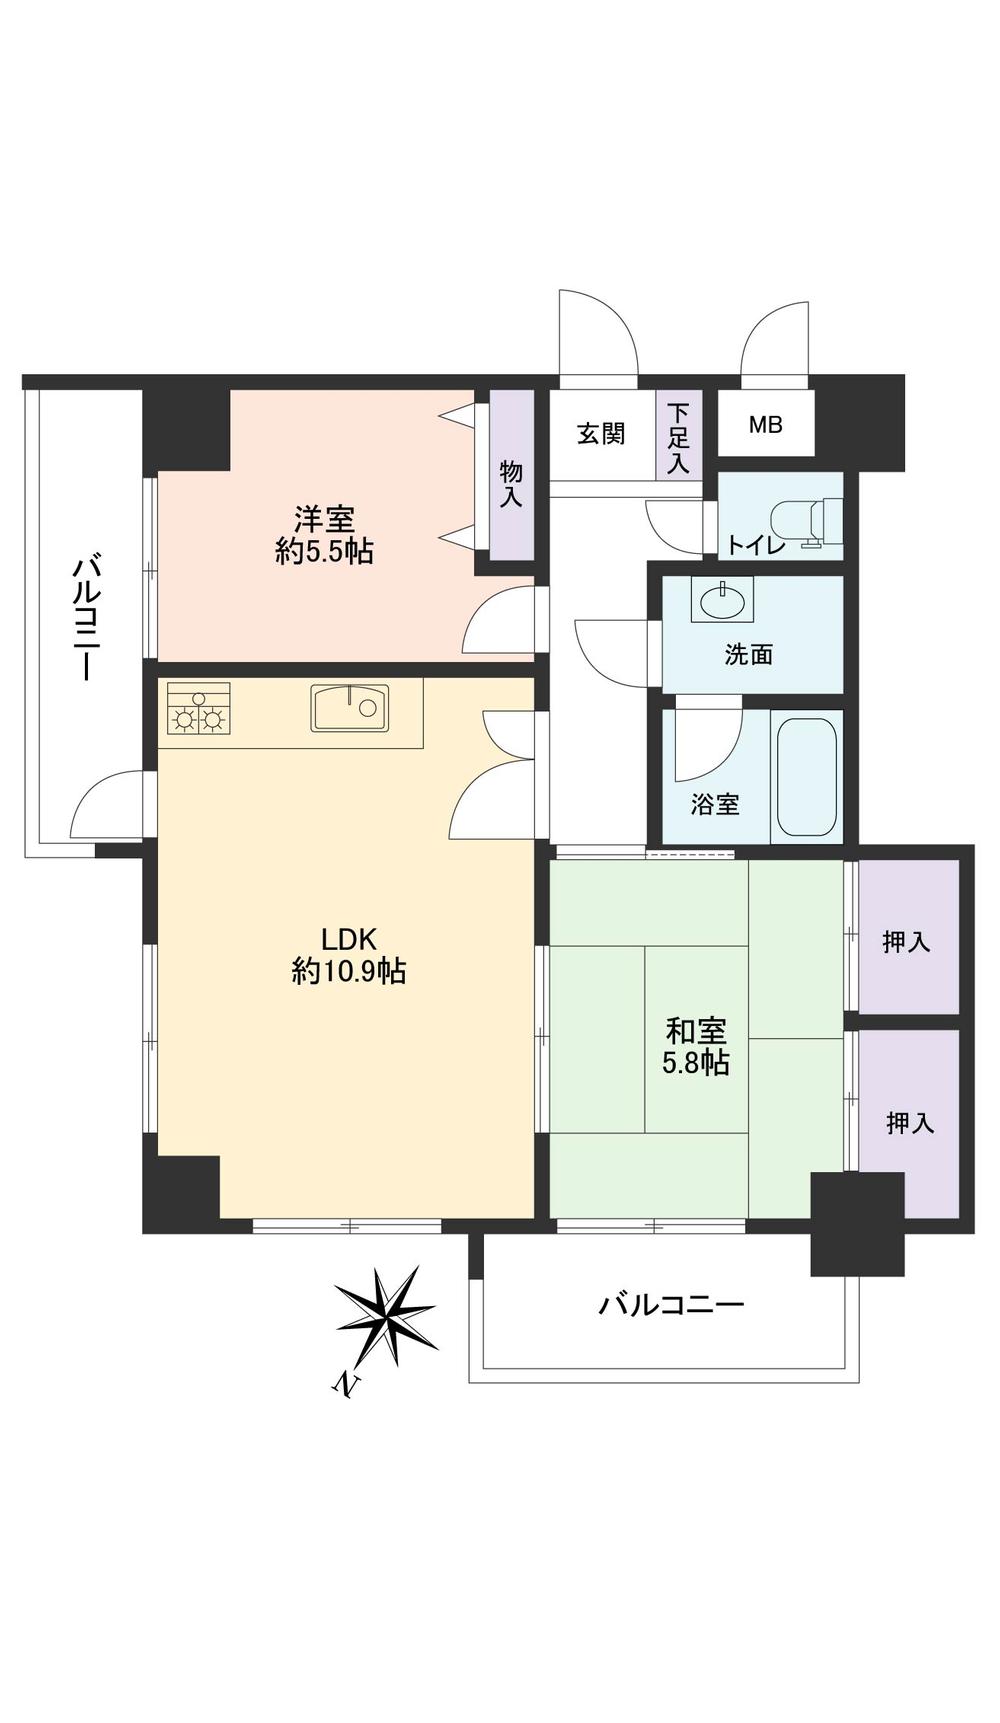 Floor plan. 2LDK, Price 13.3 million yen, Footprint 55.5 sq m , Balcony area 9.79 sq m